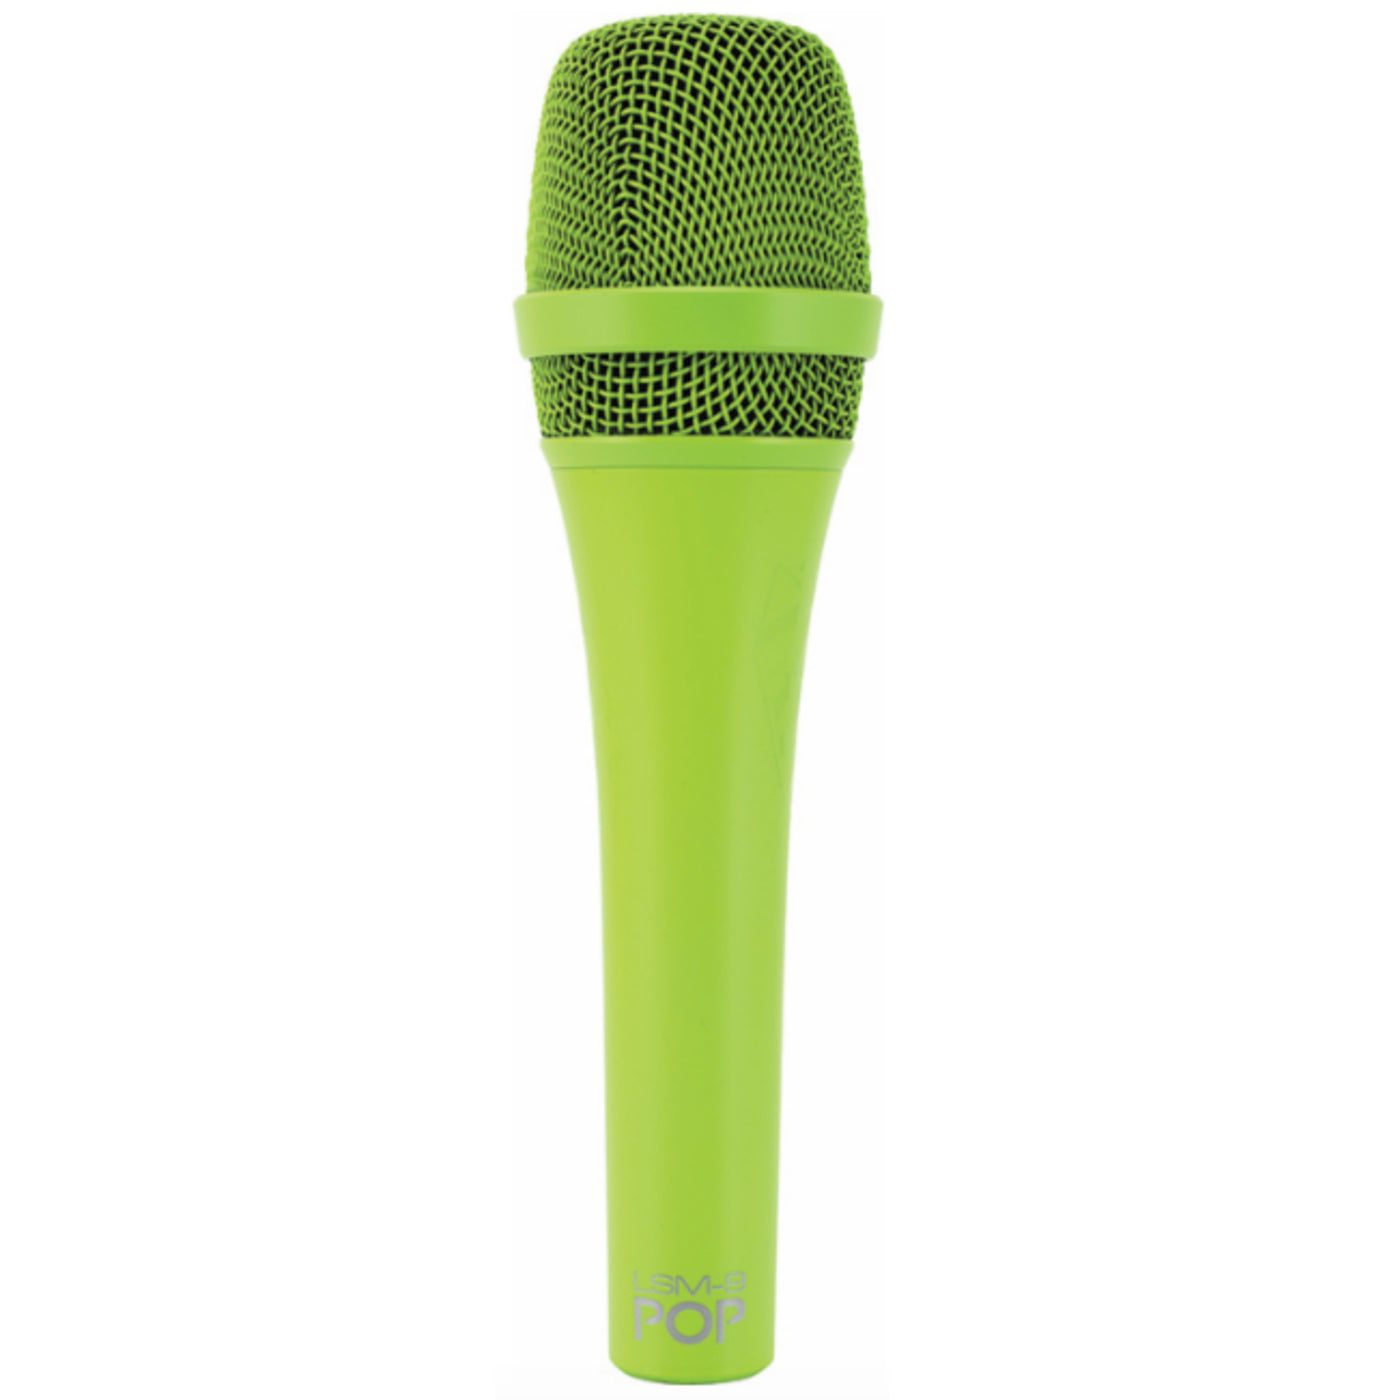 MXL LSM-9 Premium Dynamic Vocal Microphone - Pop Green